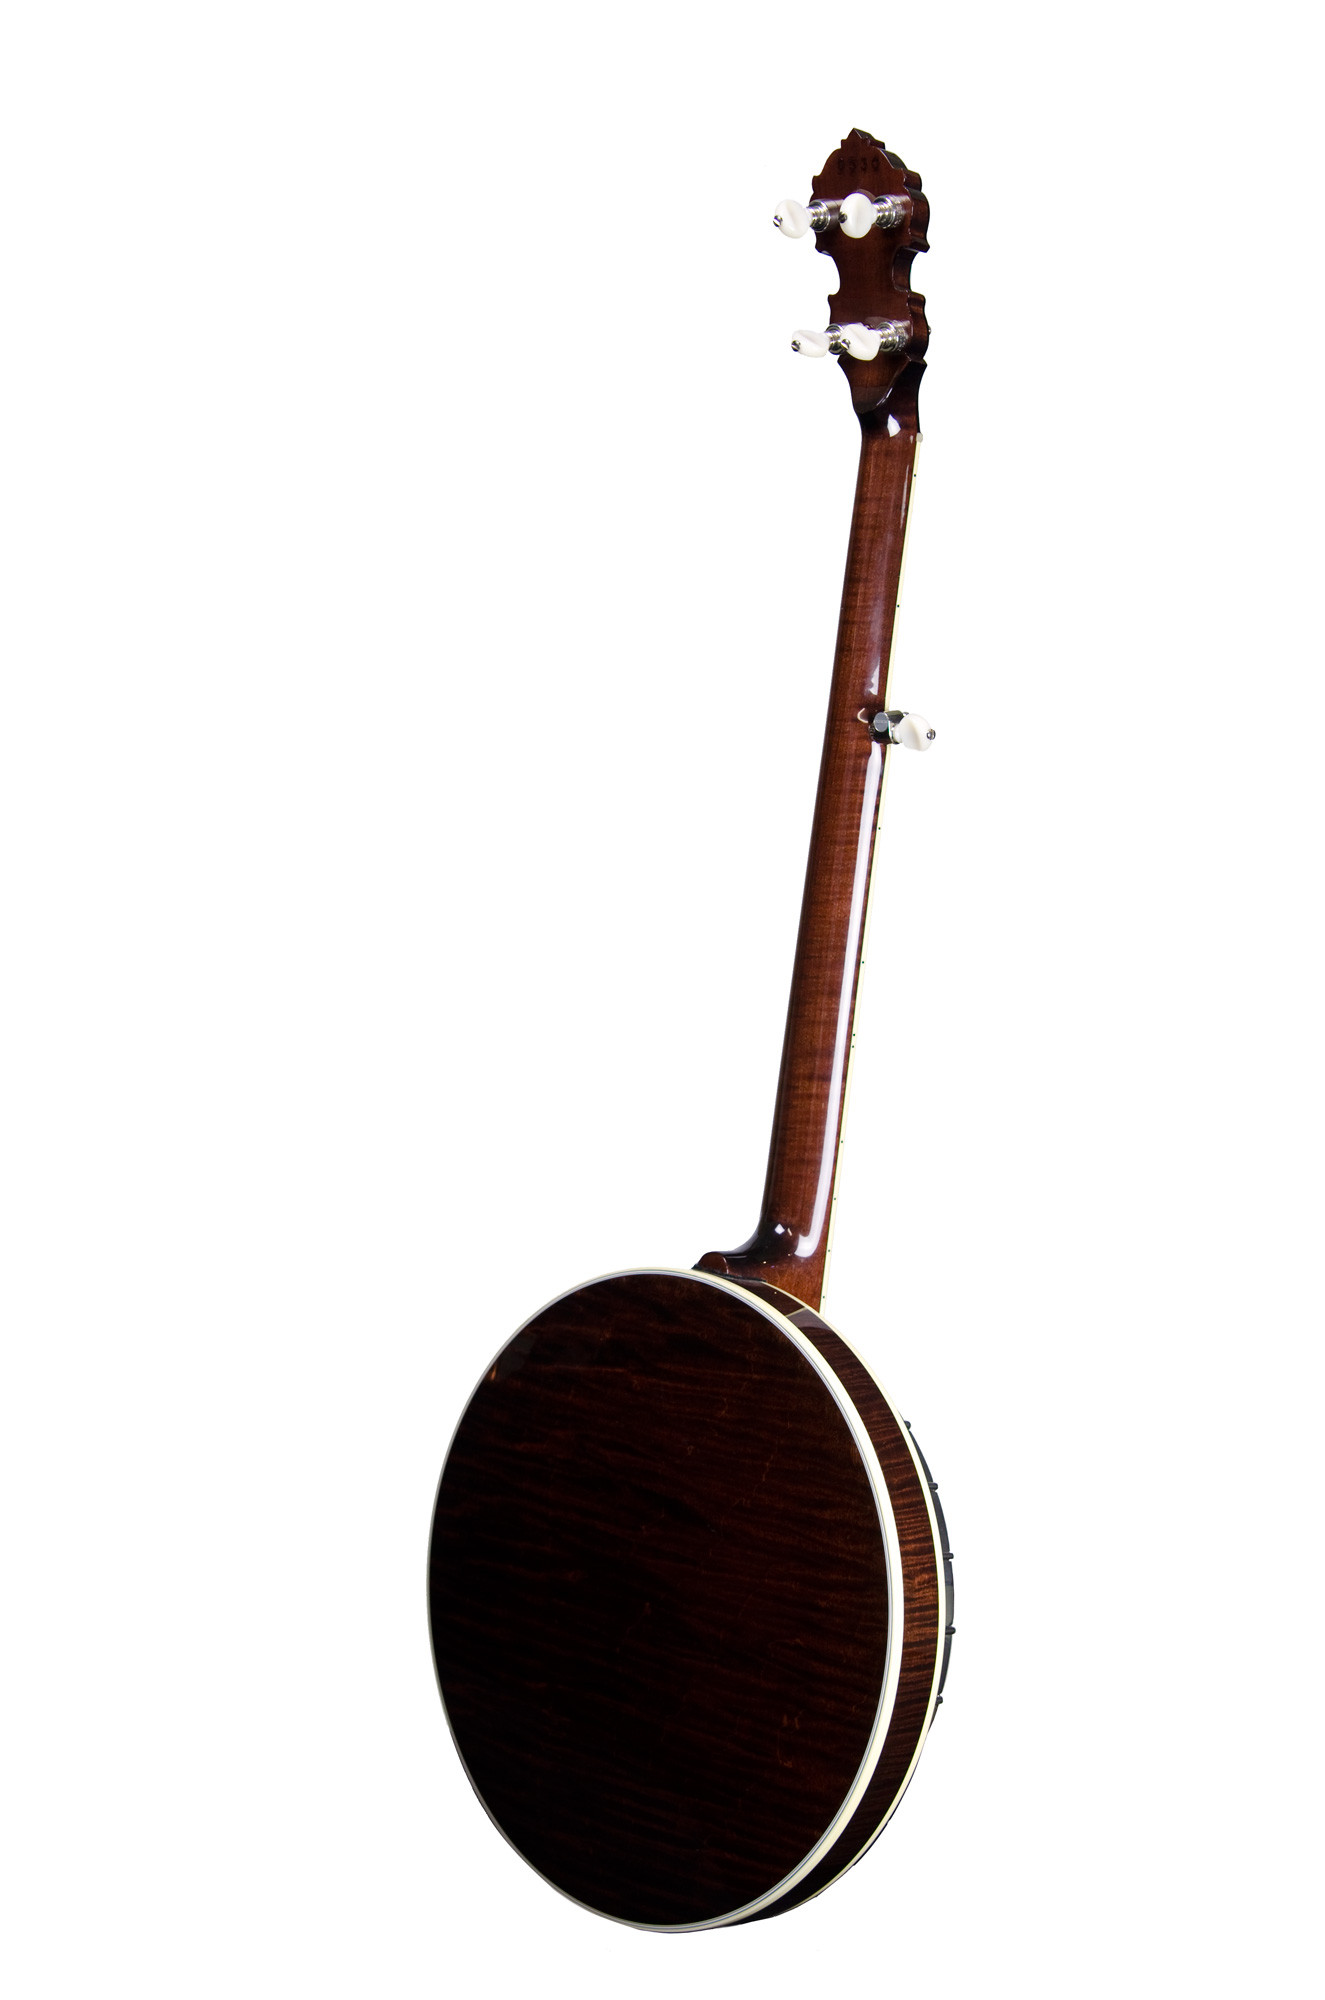 Deering Tenbrooks Saratoga Star™ Banjo w/ -06- Tone Ring & Radiused Fingerboard